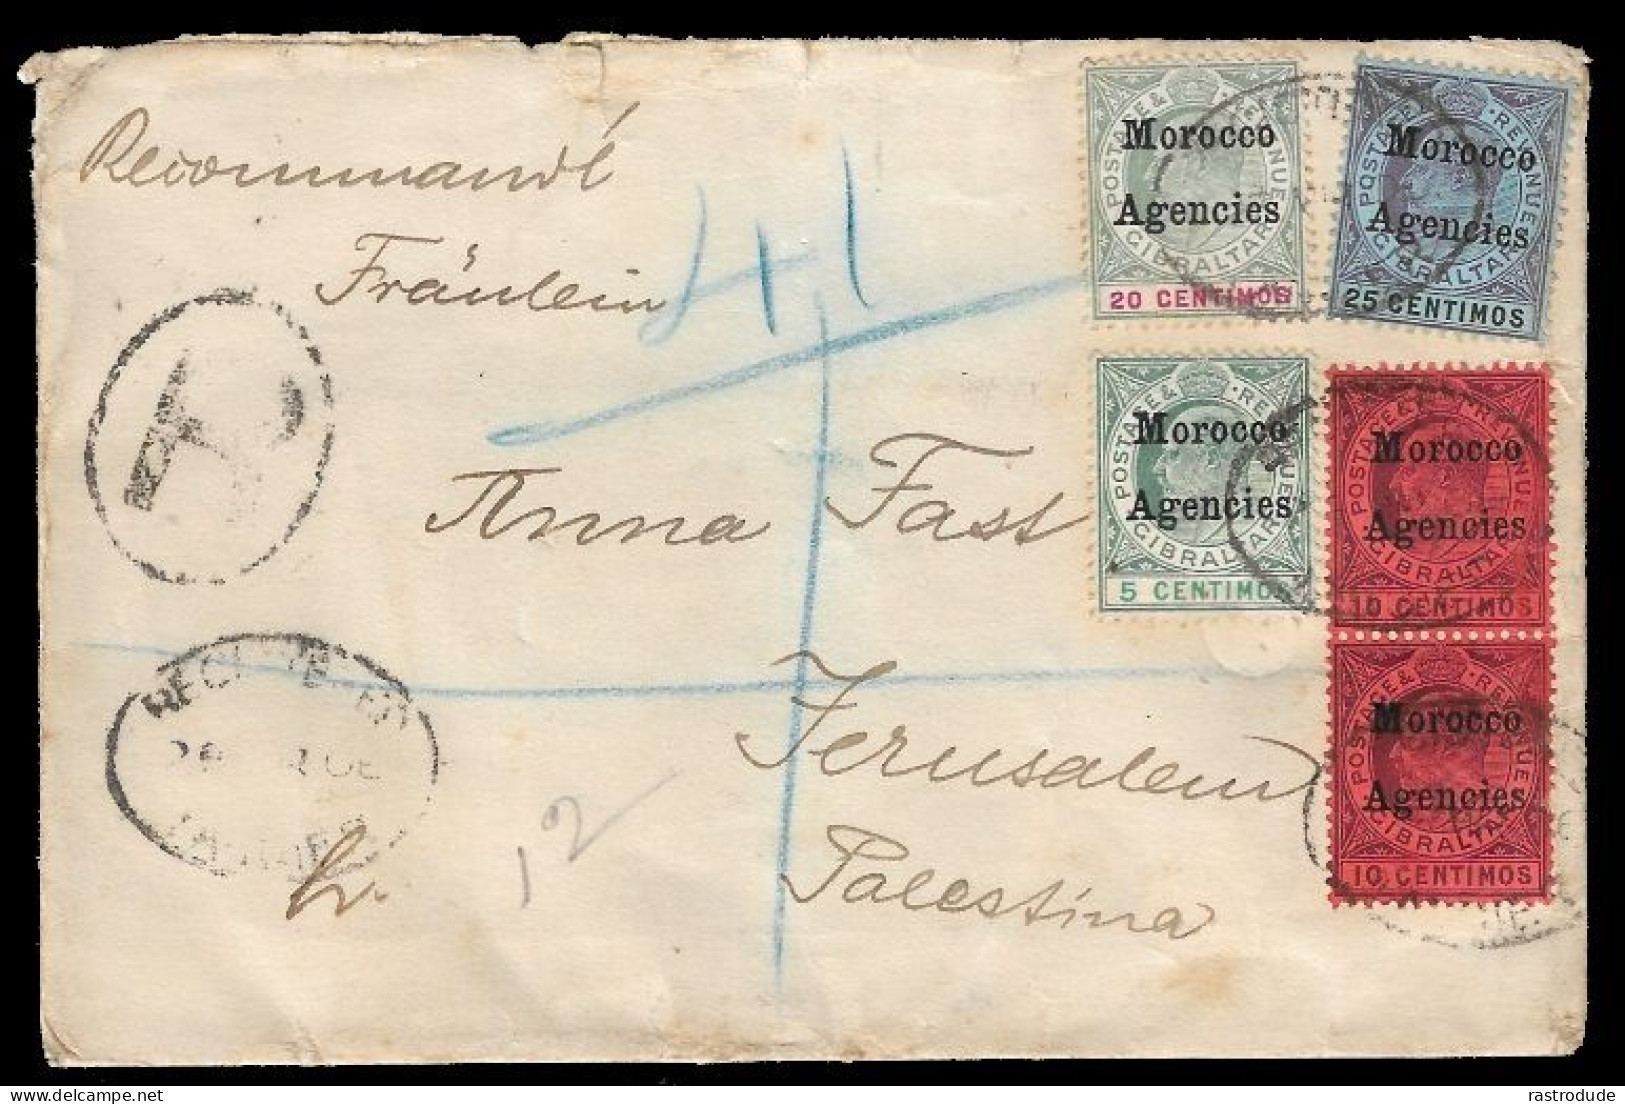 1906 MOROCCO AGENCIES Brit. P.O REGISTERED LETTER TO JERUSALEM / HOLYLAND / PALESTINE - Morocco Agencies / Tangier (...-1958)